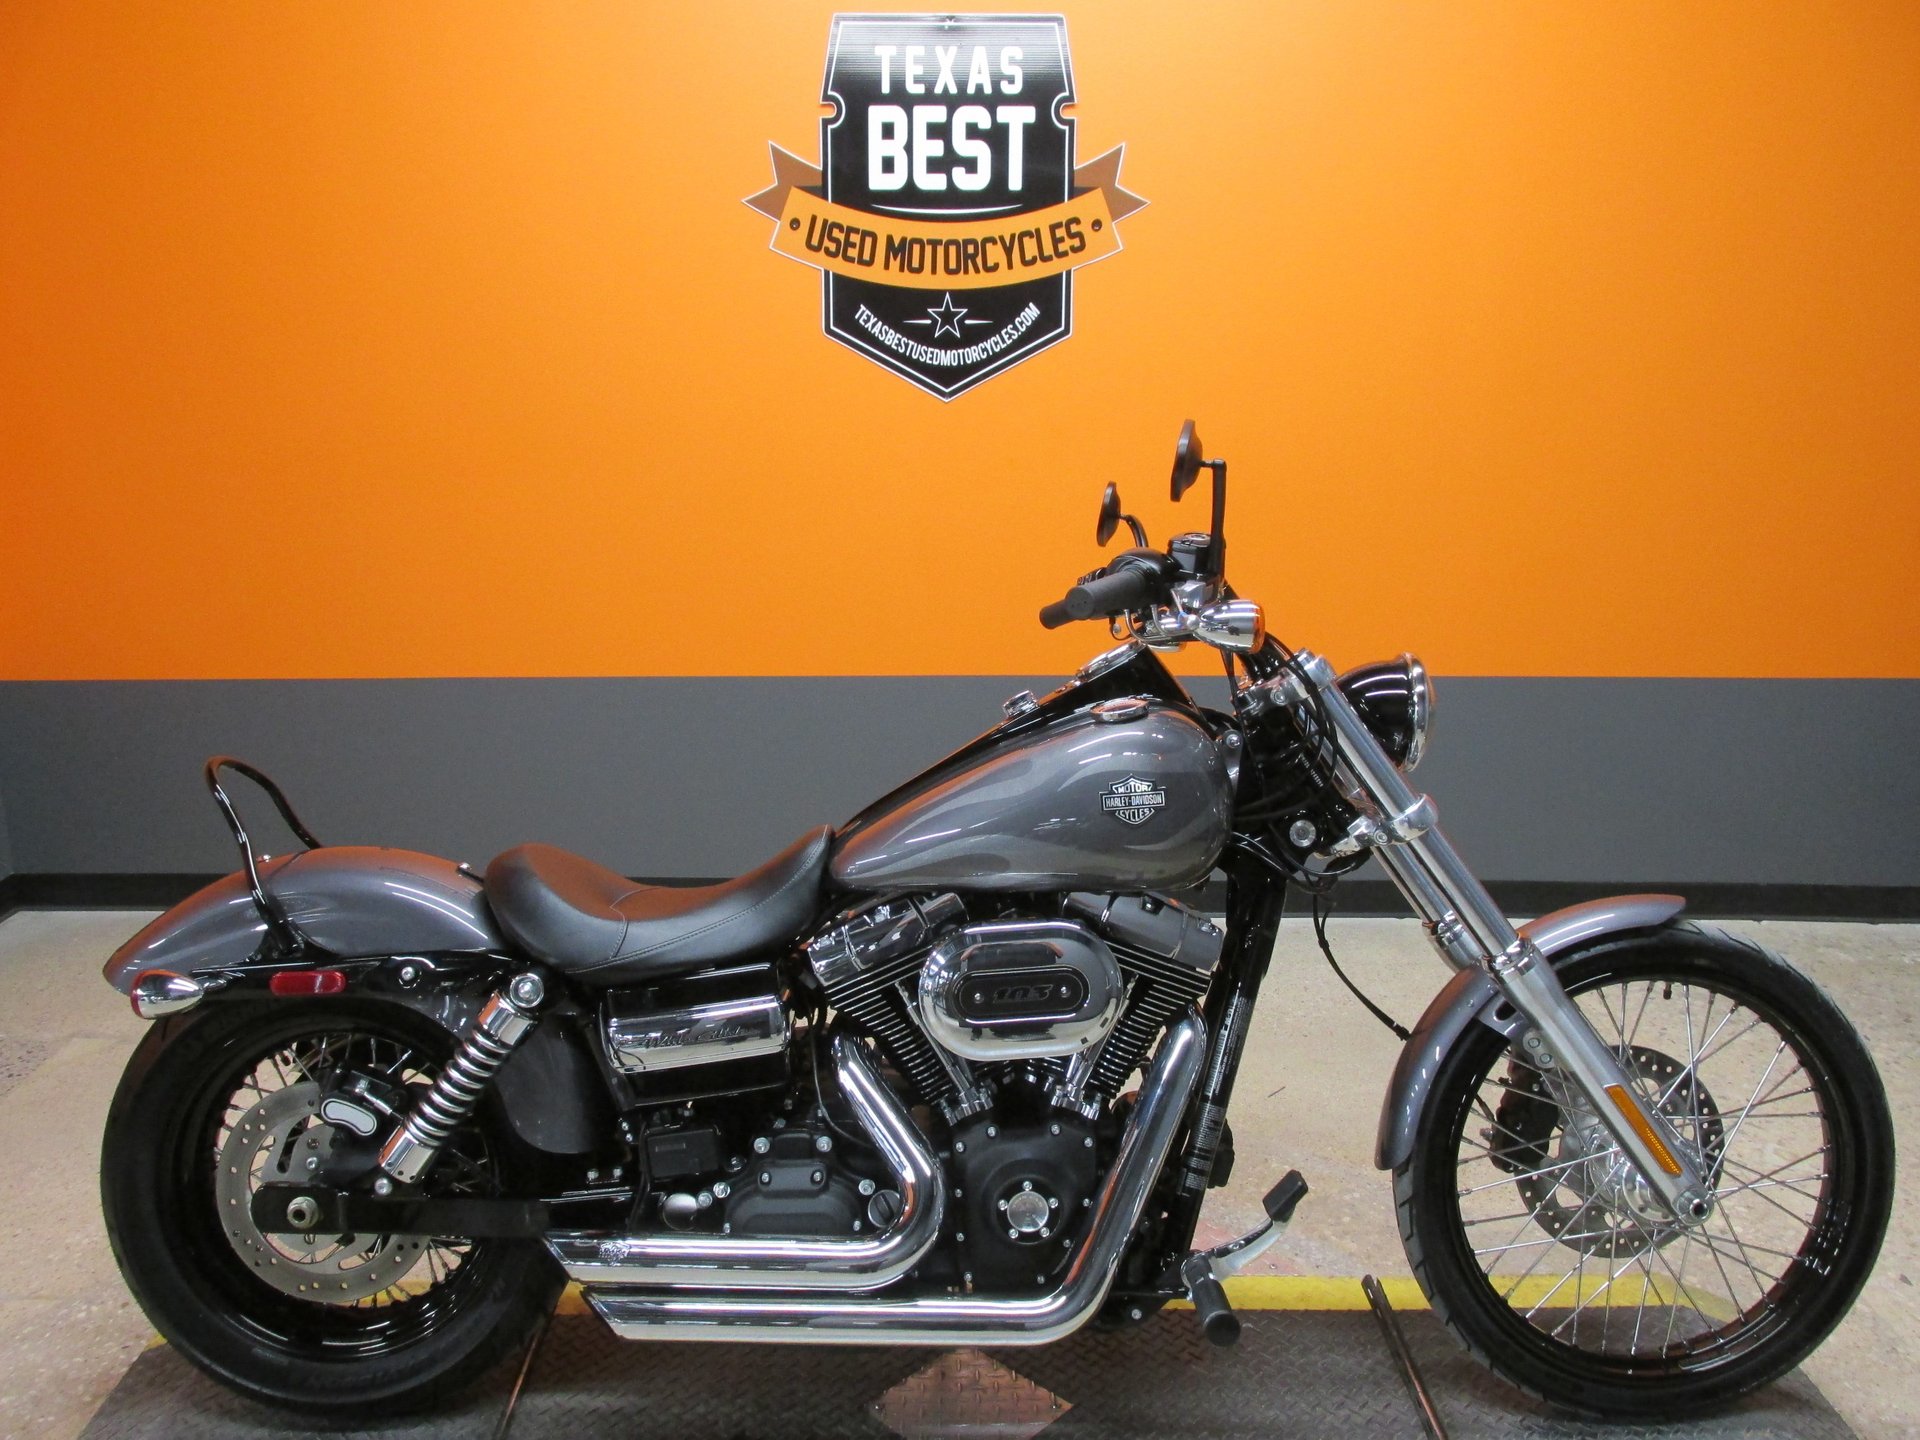 2016 Harley Davidson Dyna Wide Glide American Motorcycle Trading Company Used Harley Davidson Motorcycles